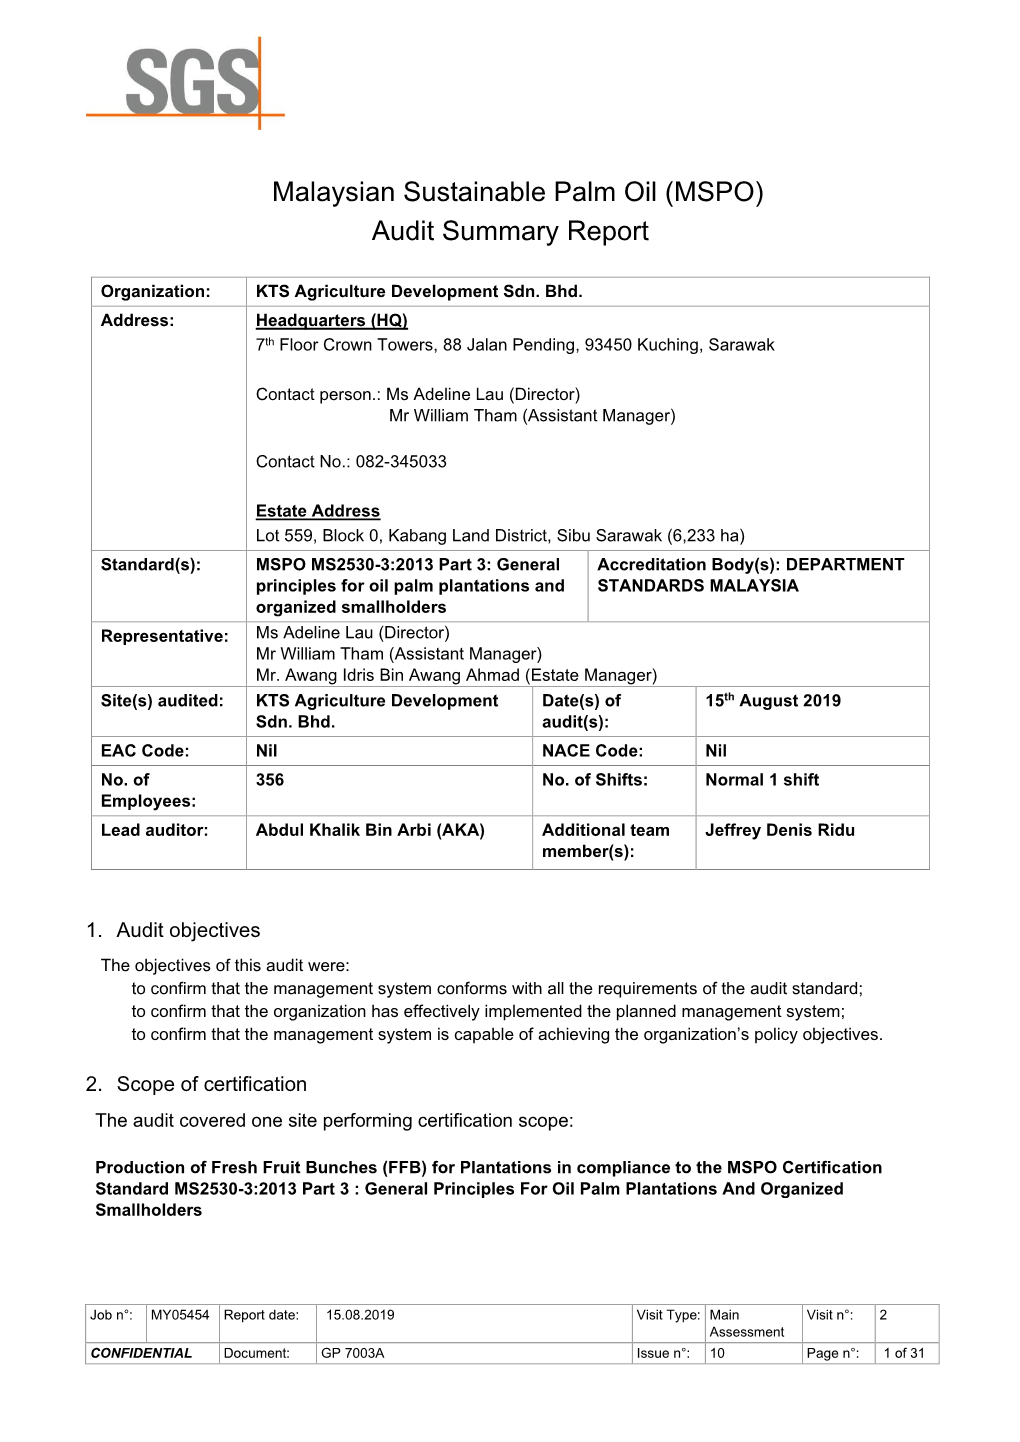 Malaysian Sustainable Palm Oil (MSPO) Audit Summary Report